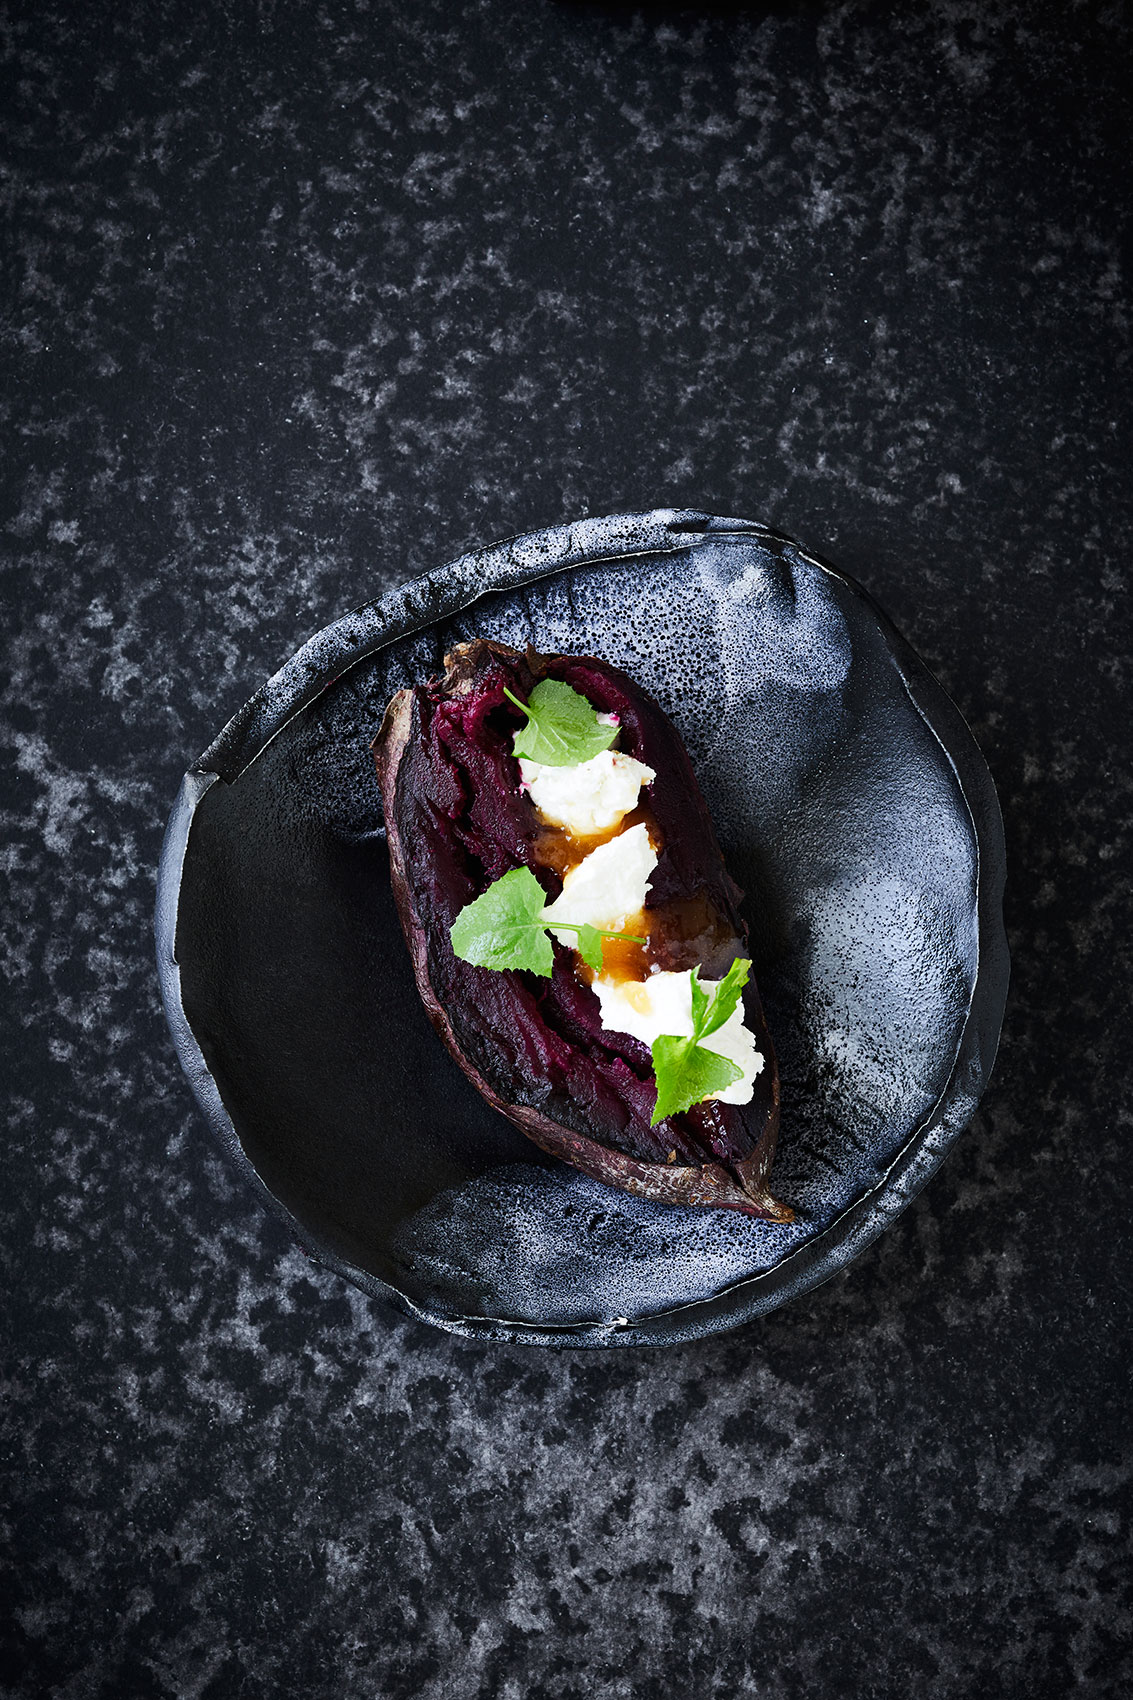 Hiakai • New Zealand Purple Kumara on Dark Plate • Lifestyle & Hospitality Food Photography